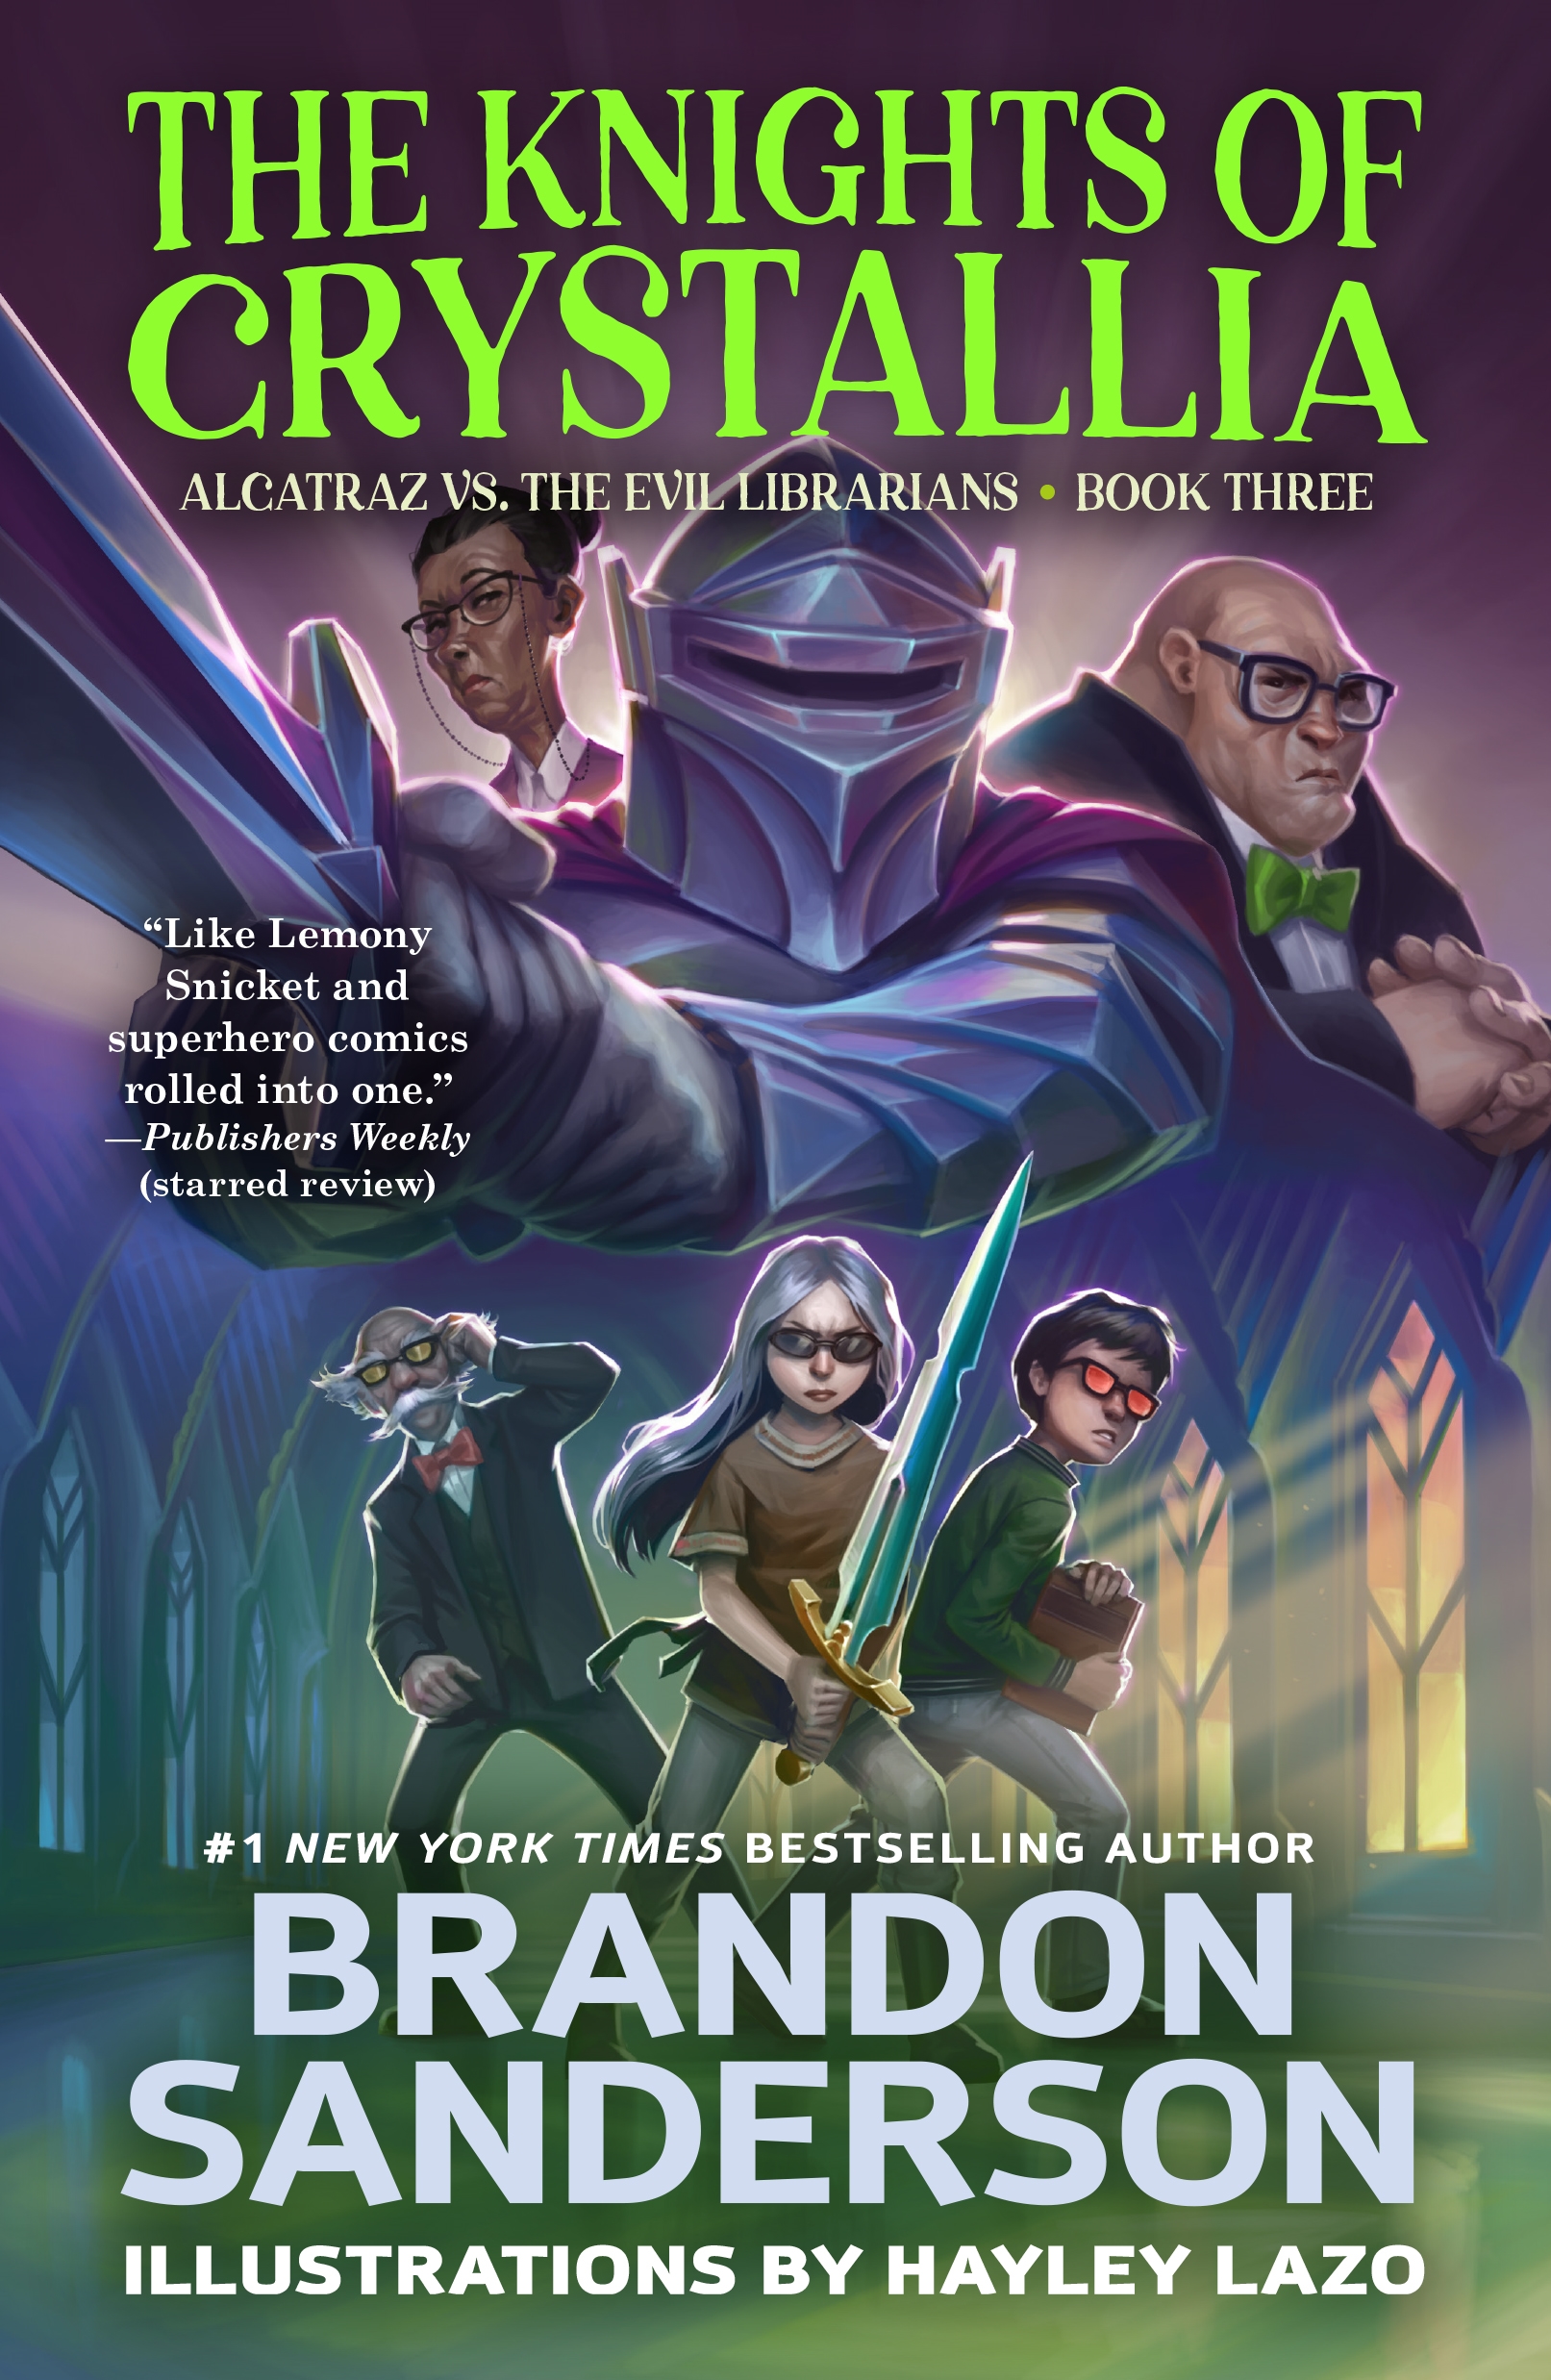 The Knights of Crystallia : Alcatraz vs. the Evil Librarians by Brandon Sanderson